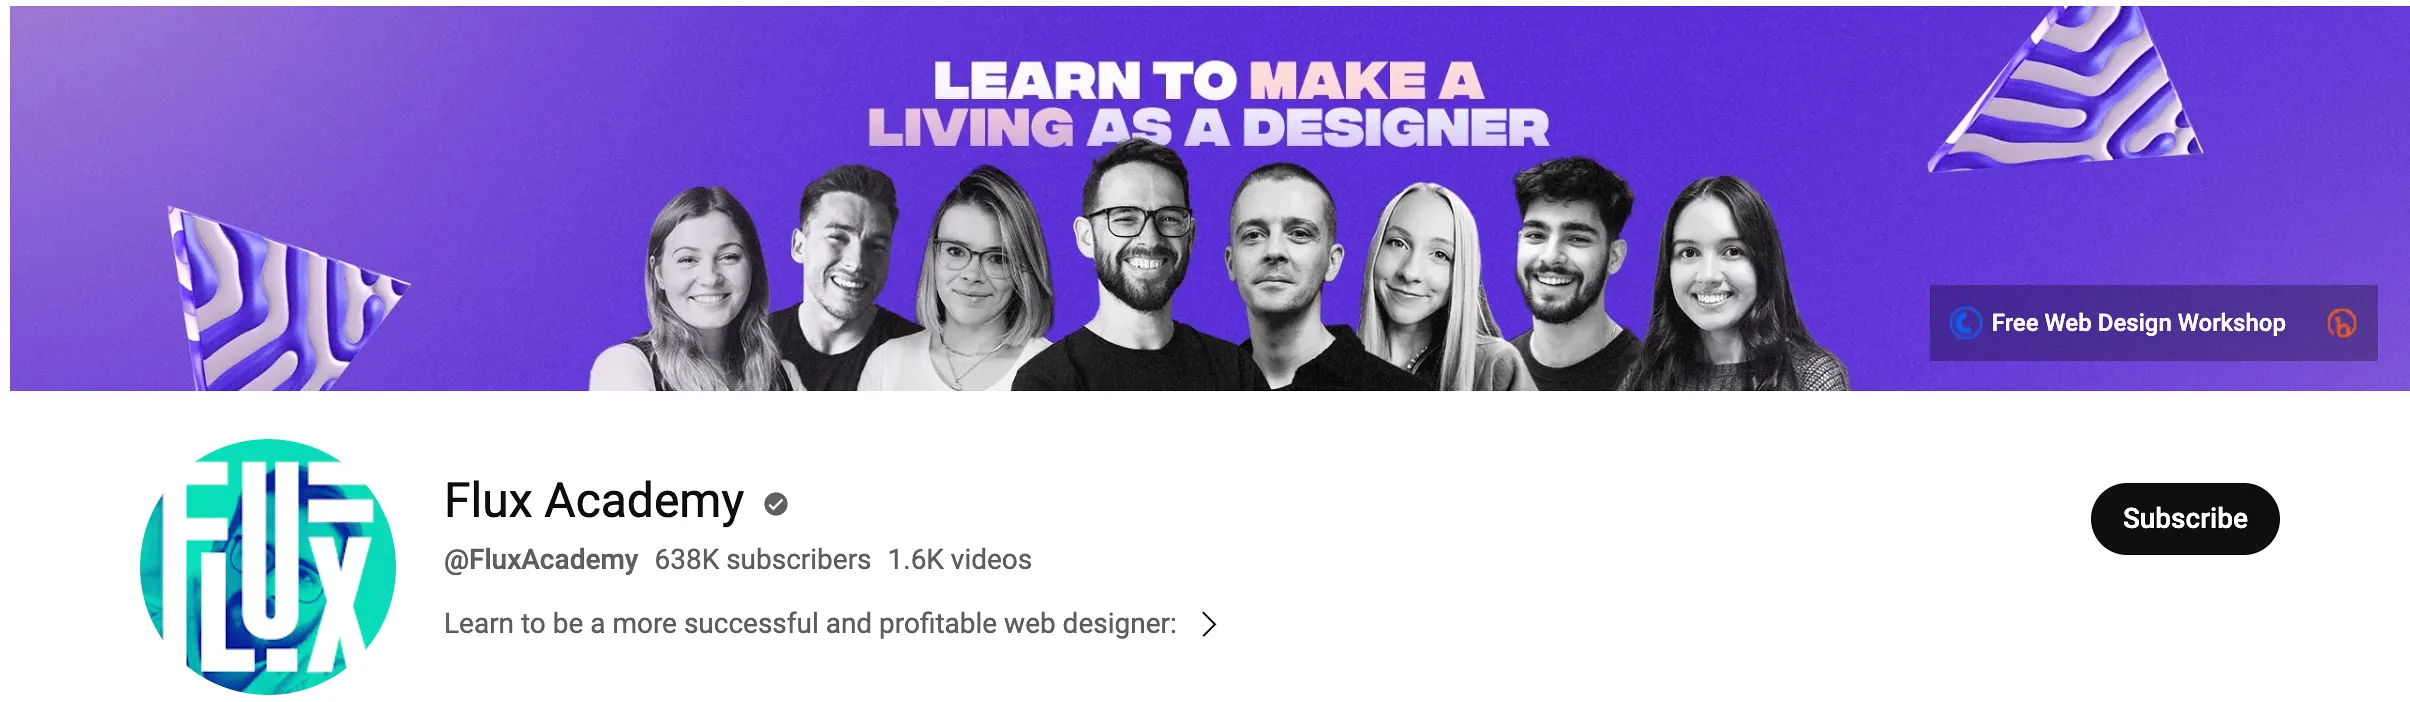 Flux Academy: Best Web Design Youtube Channel